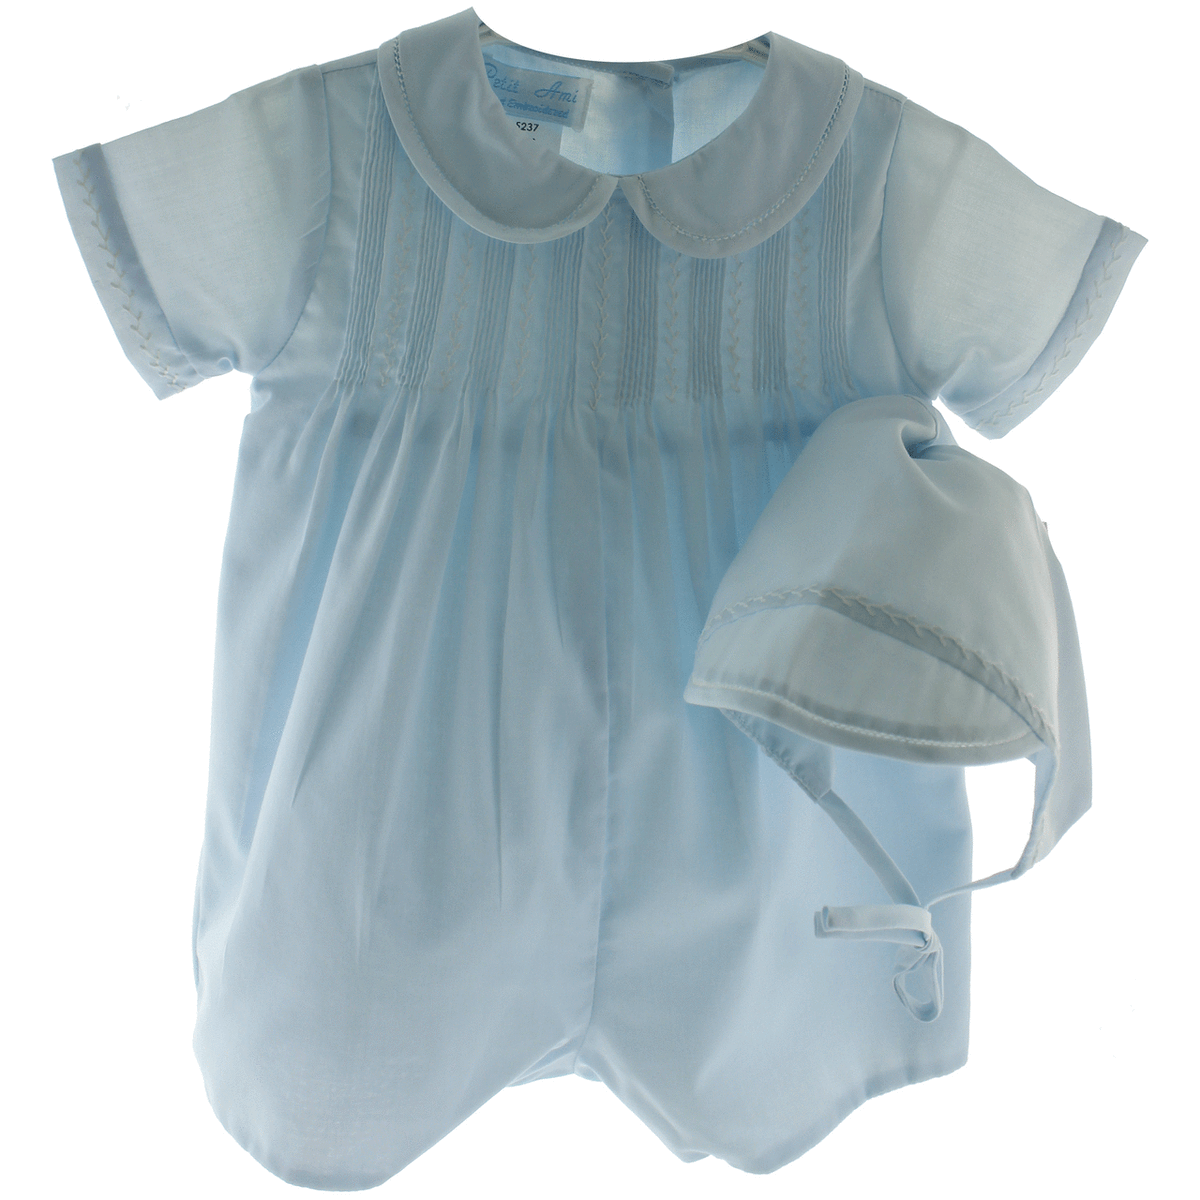 Baby Boys Blue Dedication Outfit Dressy Shortall Pintucks